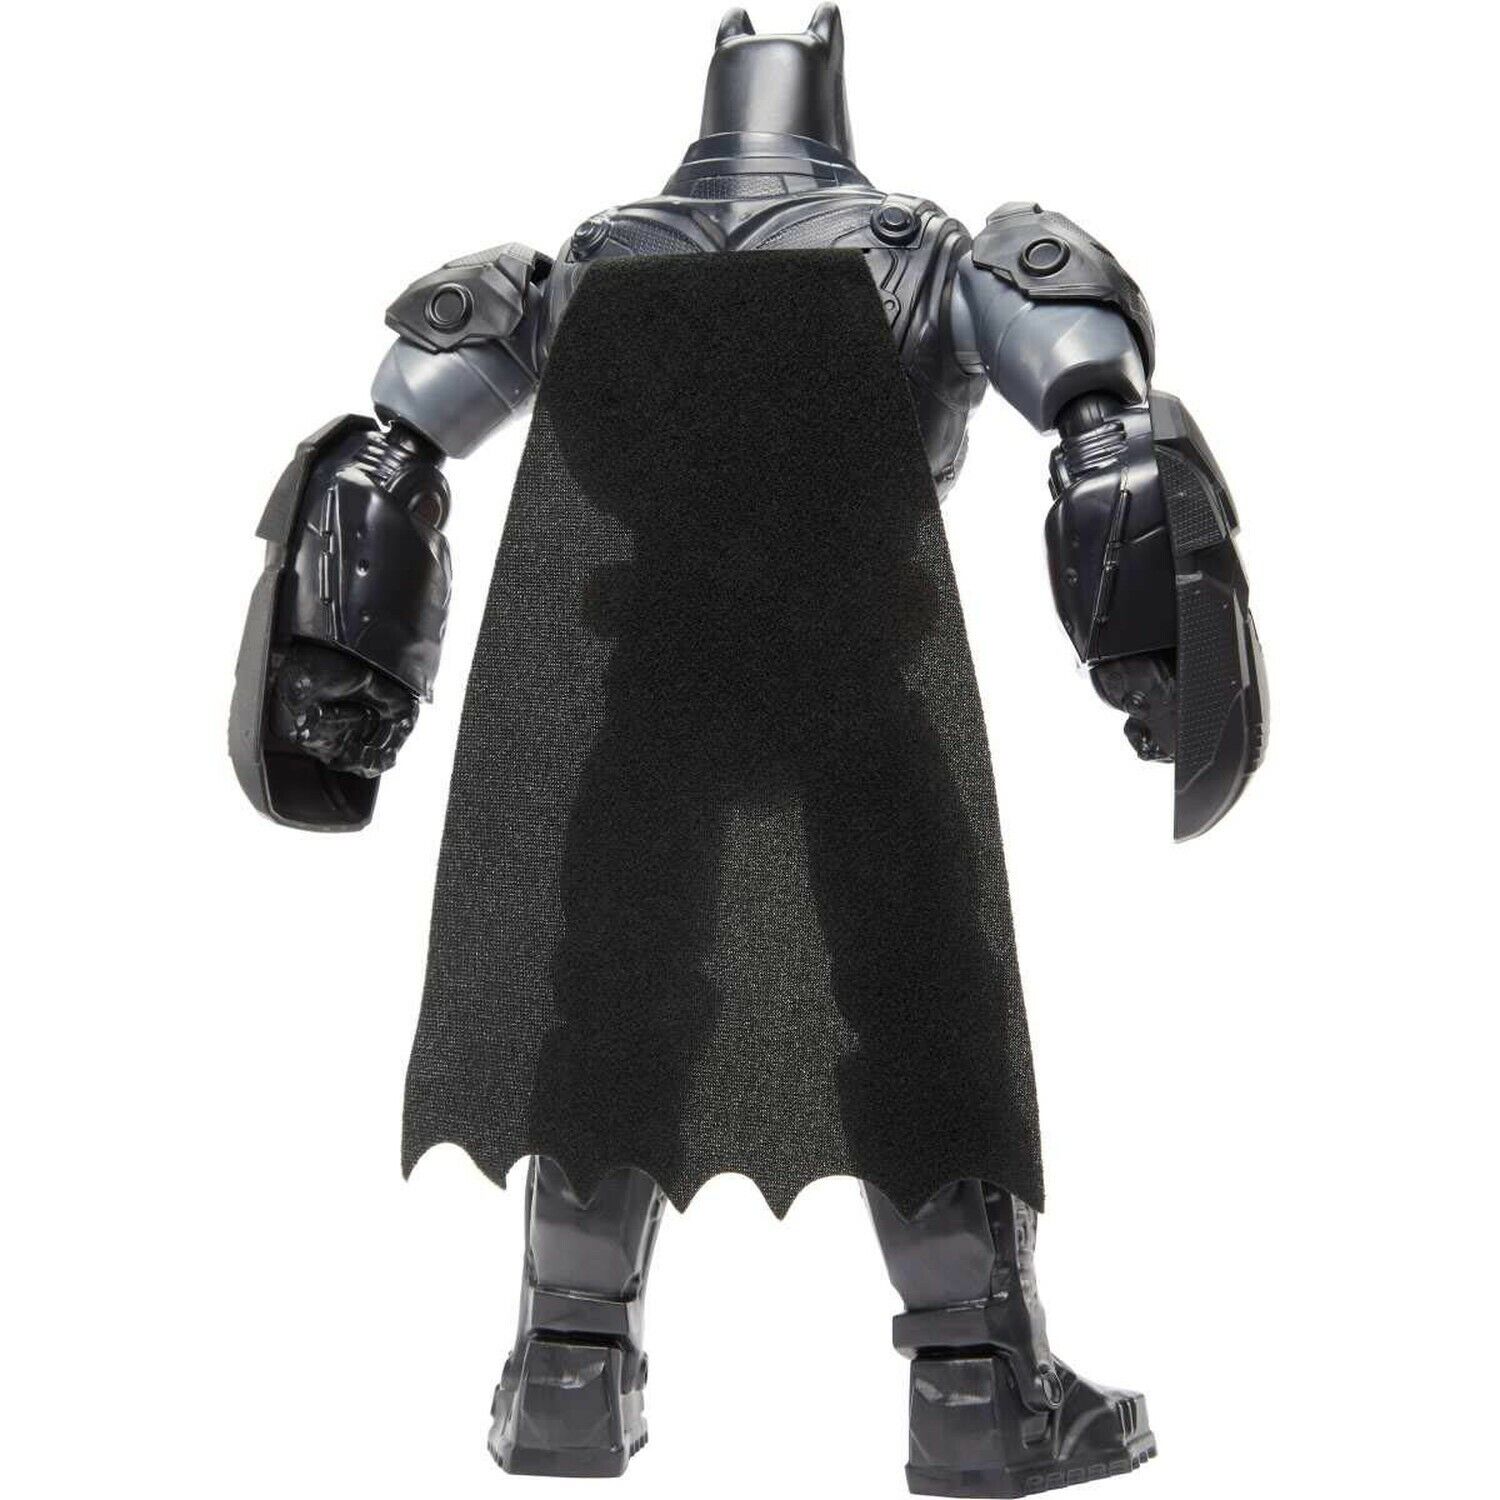 Фигурка класс. Batman Thrasher Armor. Бэтмен игрушка Бэтмен игрушка. Покажи игрушки Бэтмена с броней. Бэтмен суд сов броня трешер.